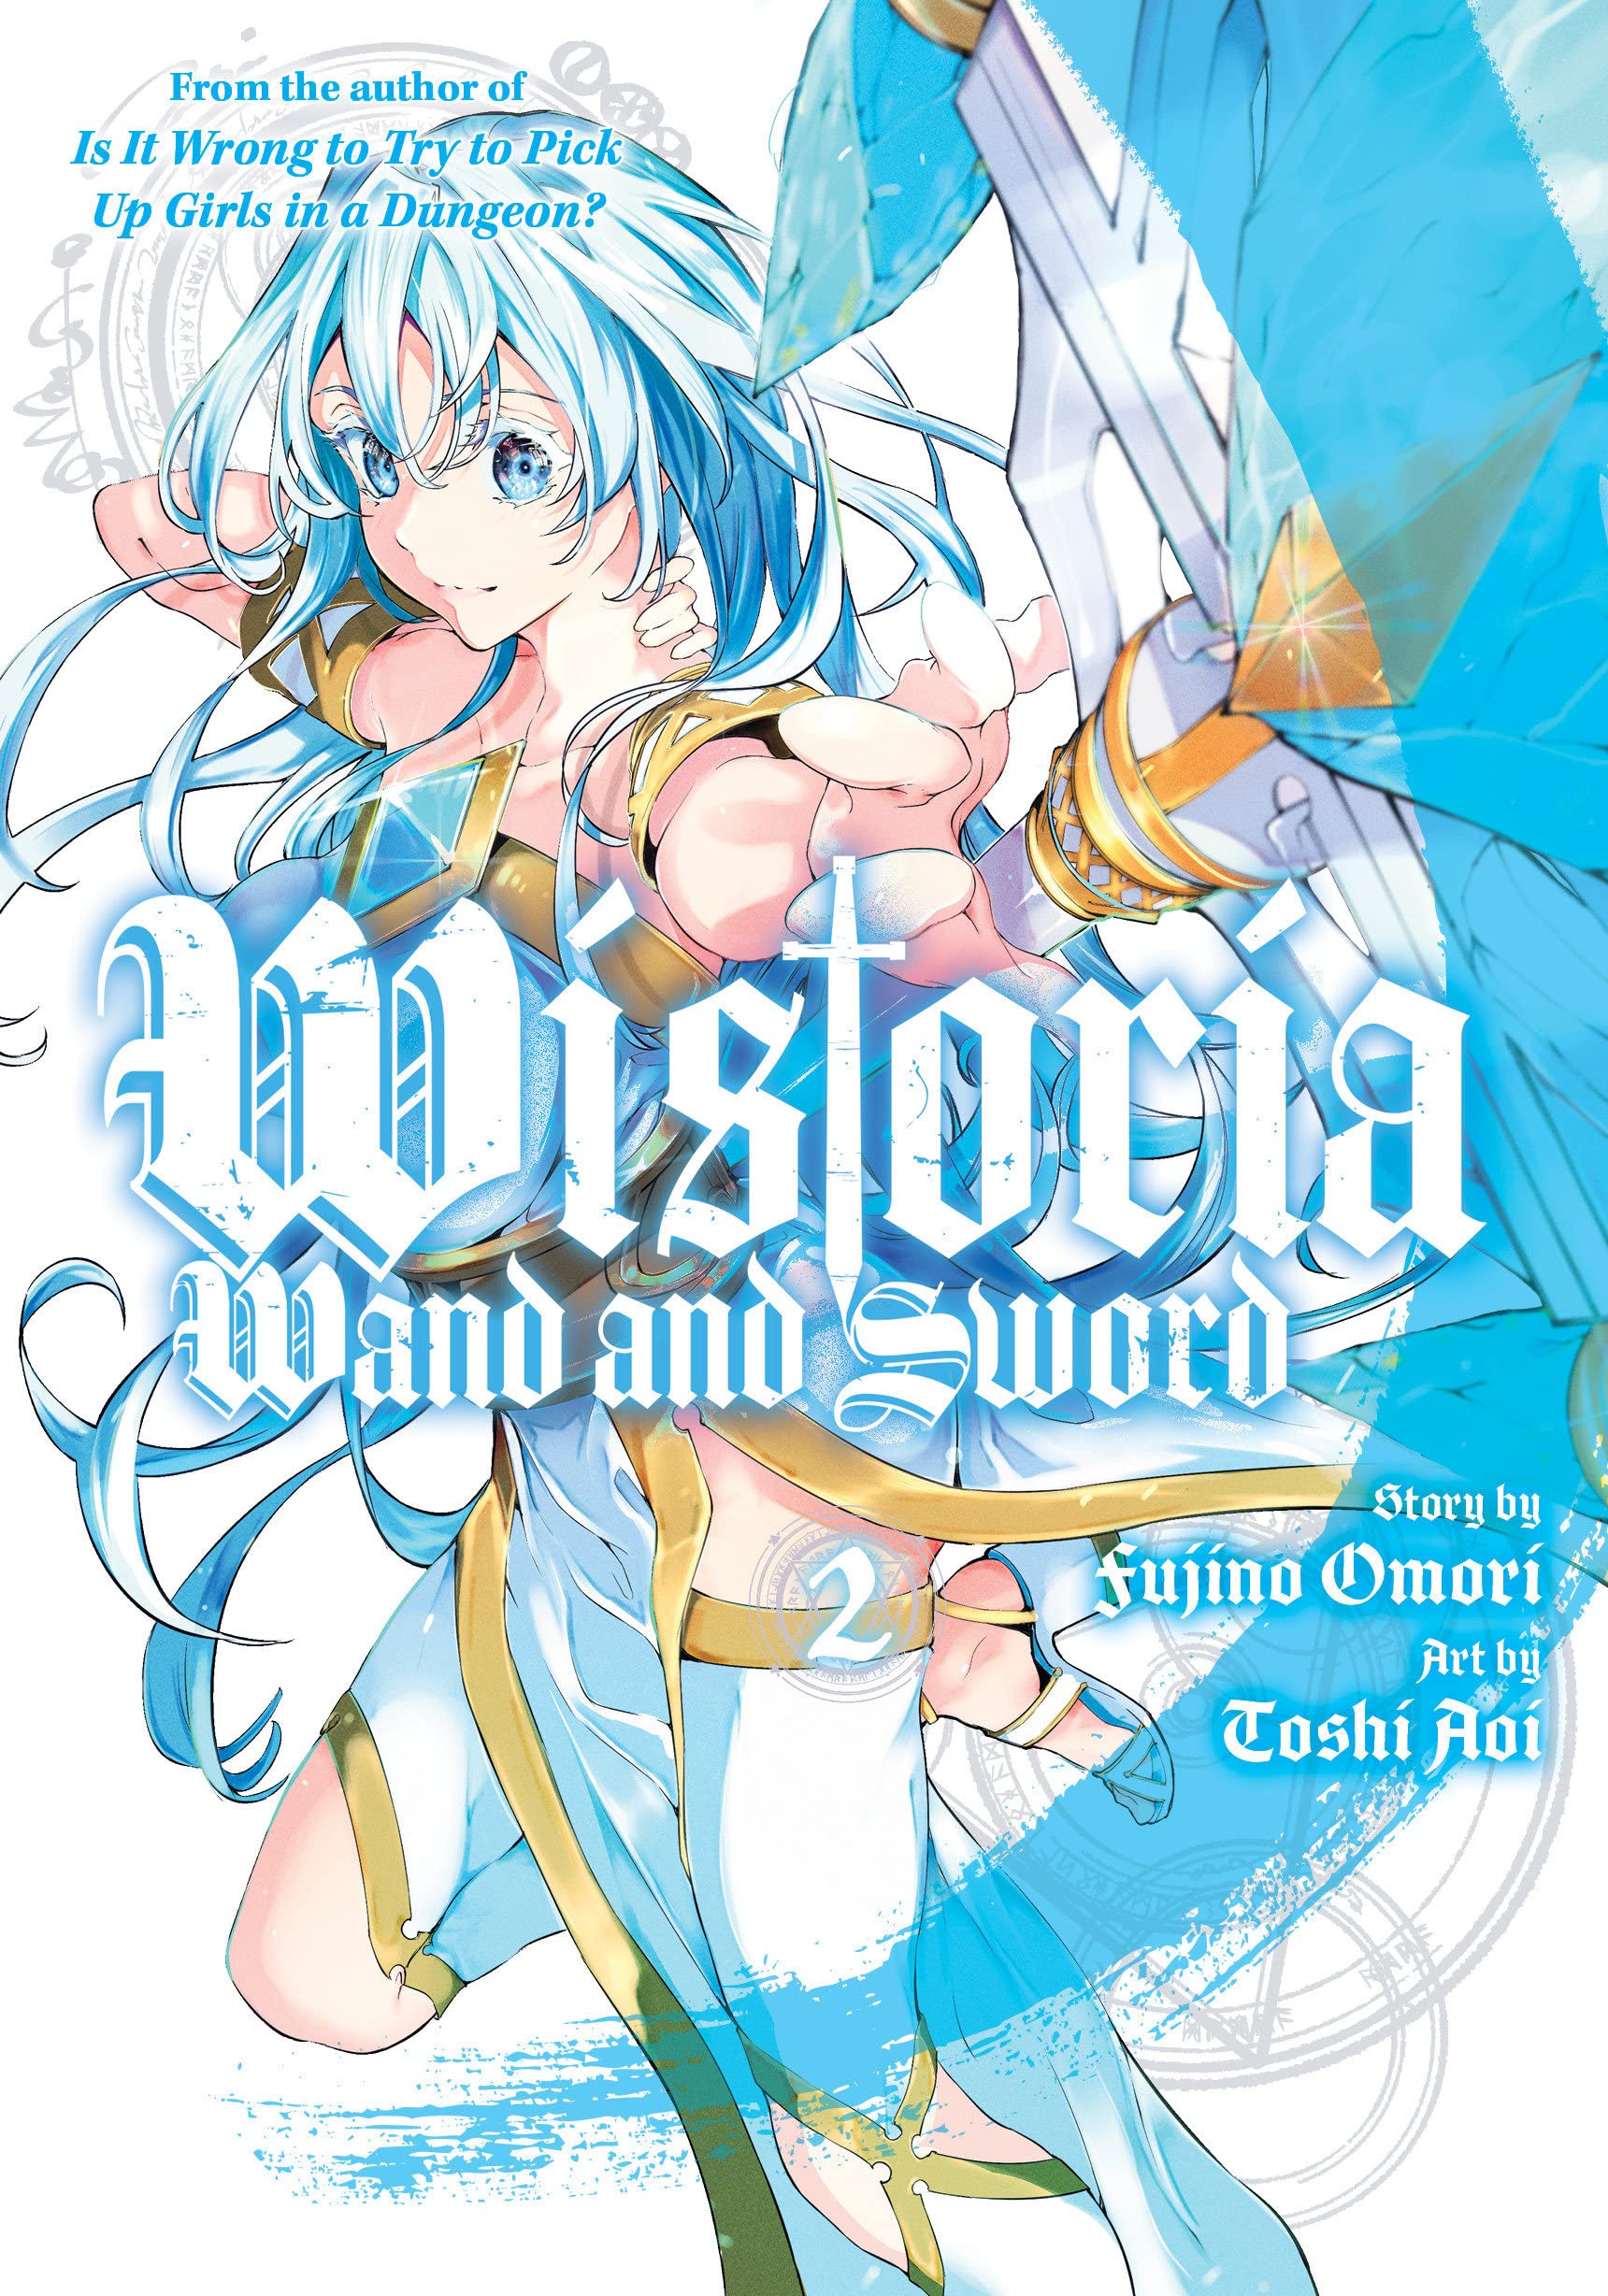 Wistoria: Wand and Sword Vol. 02